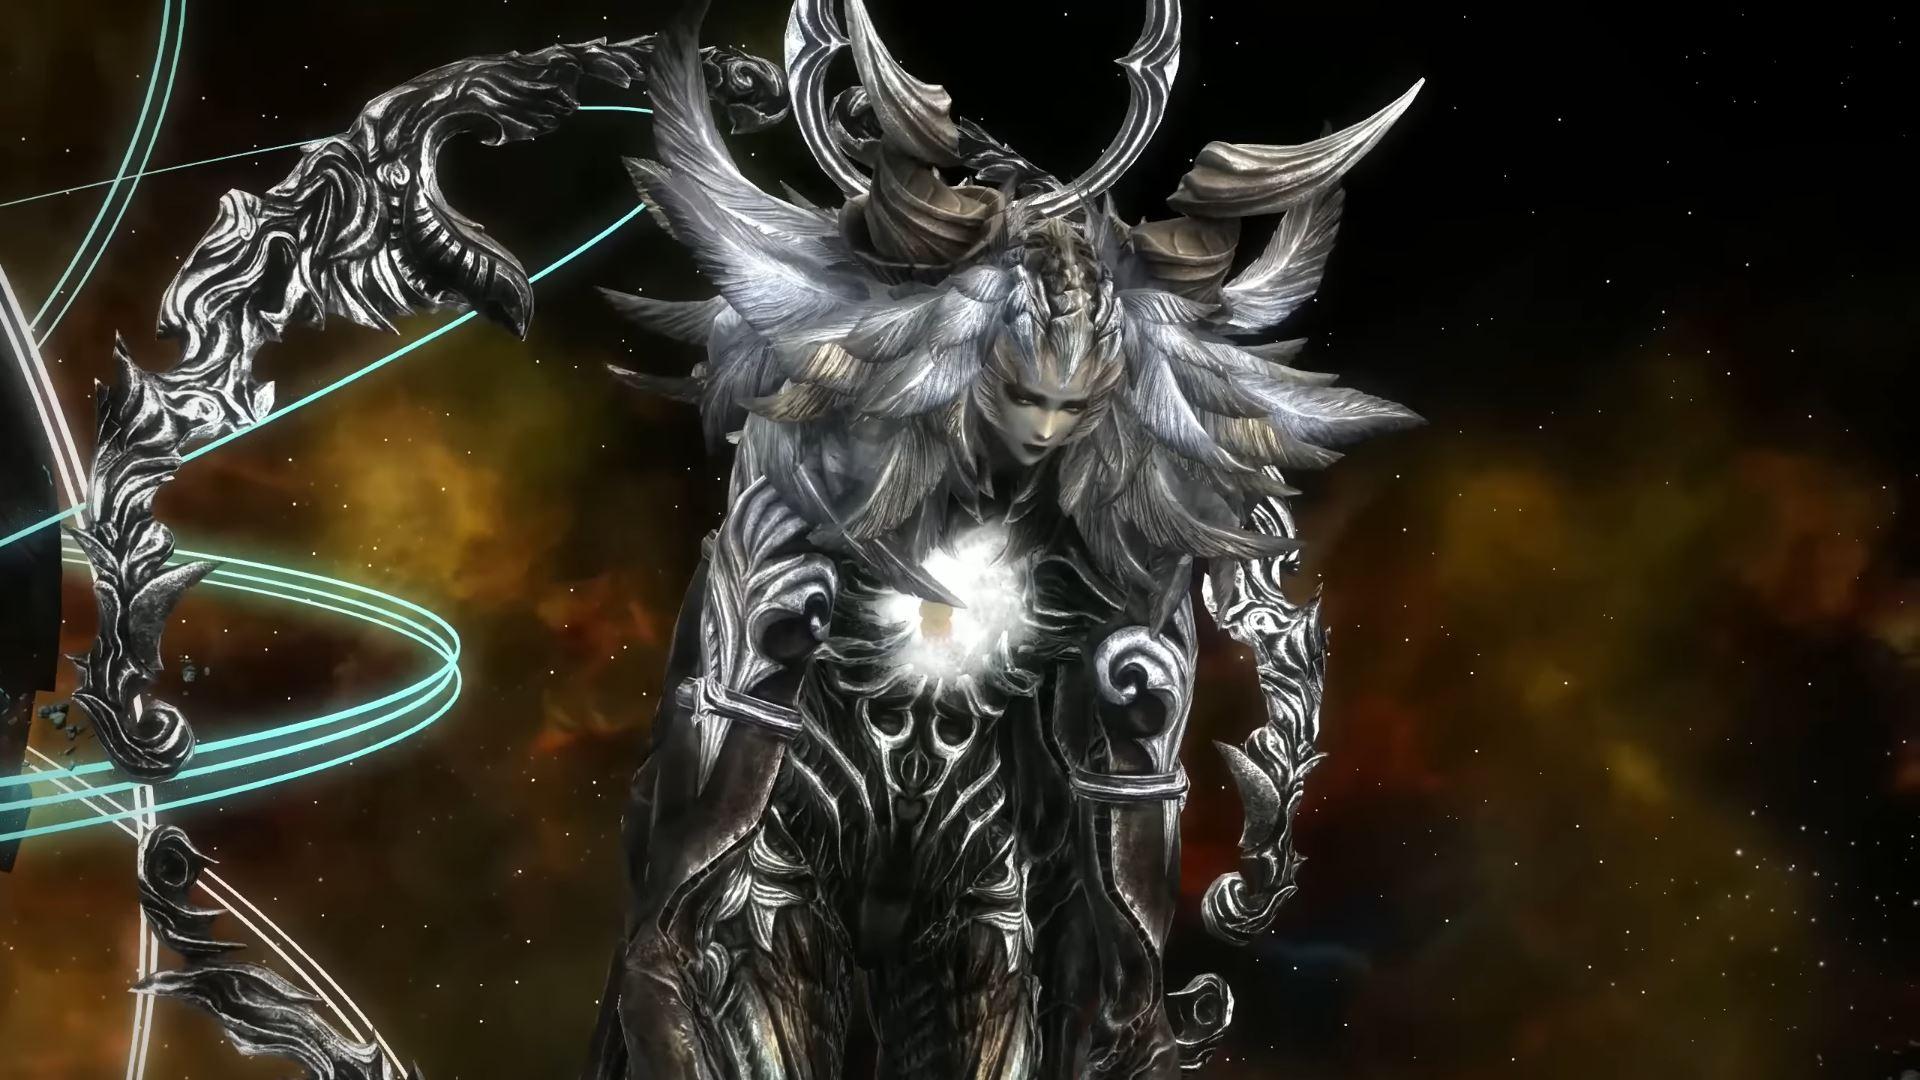 Final Fantasy XIV The Omega Protocol completion cutscene